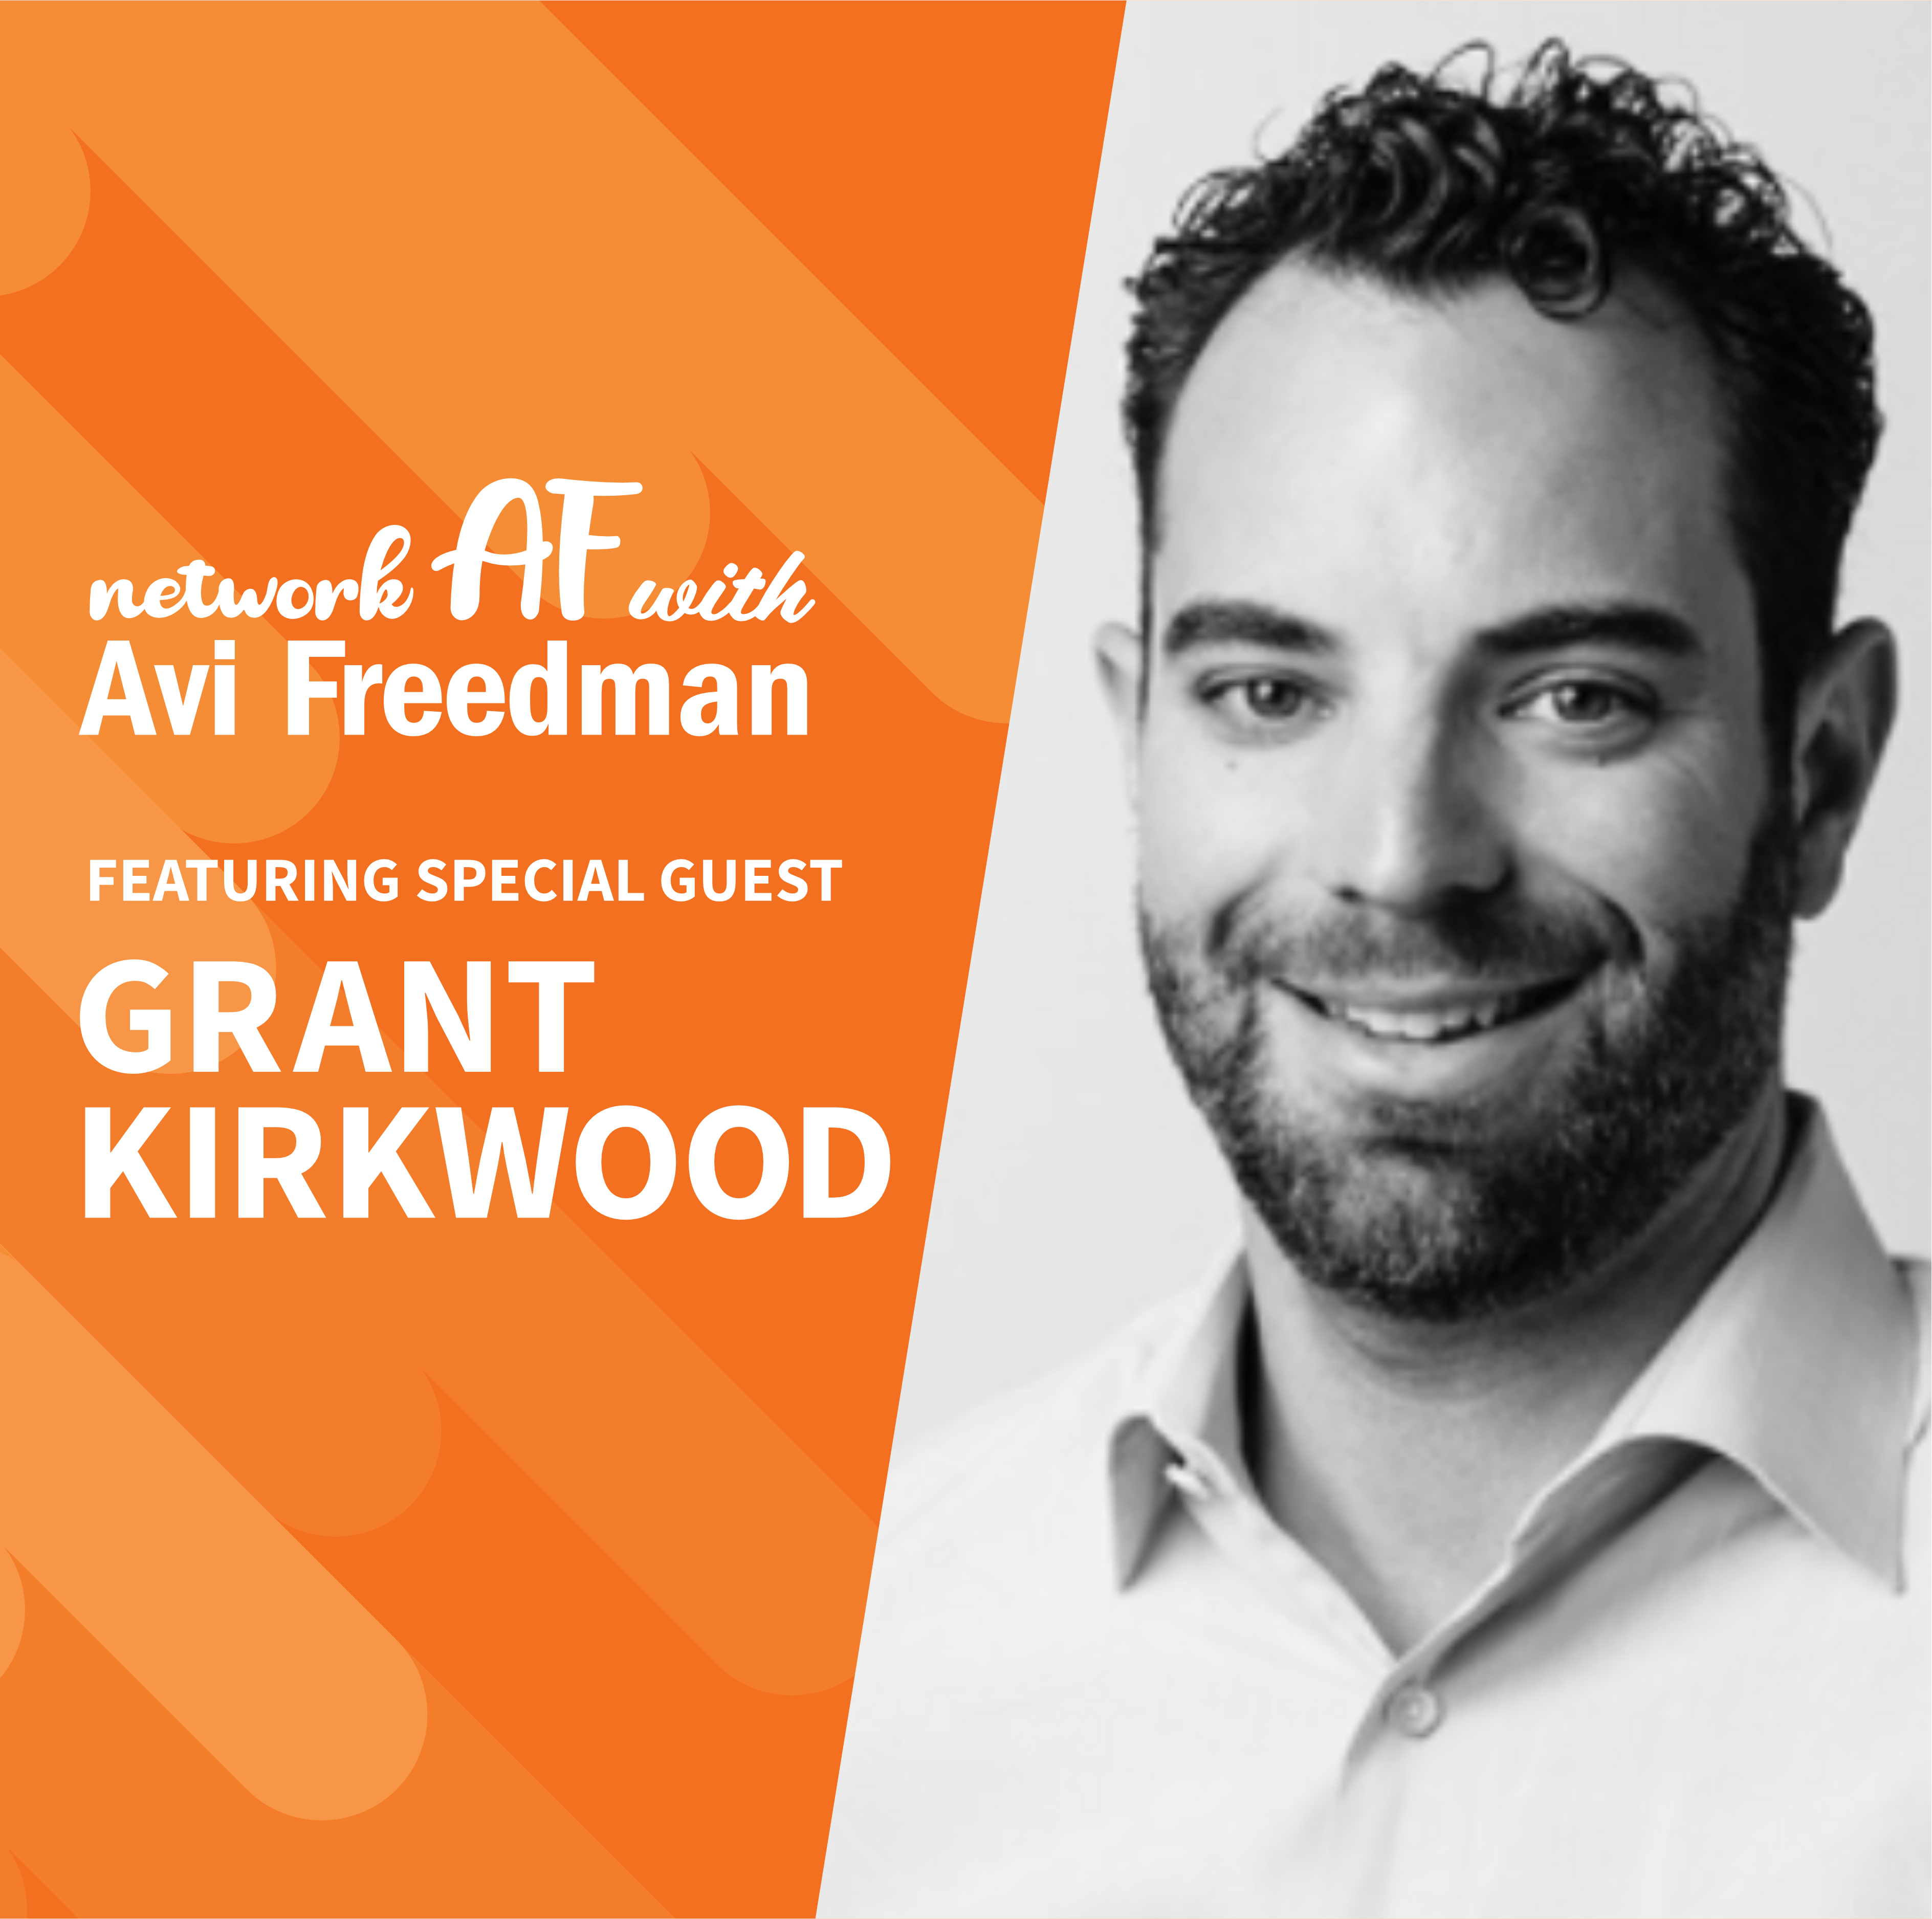 Peering, edge computing, and community with Grant Kirkwood